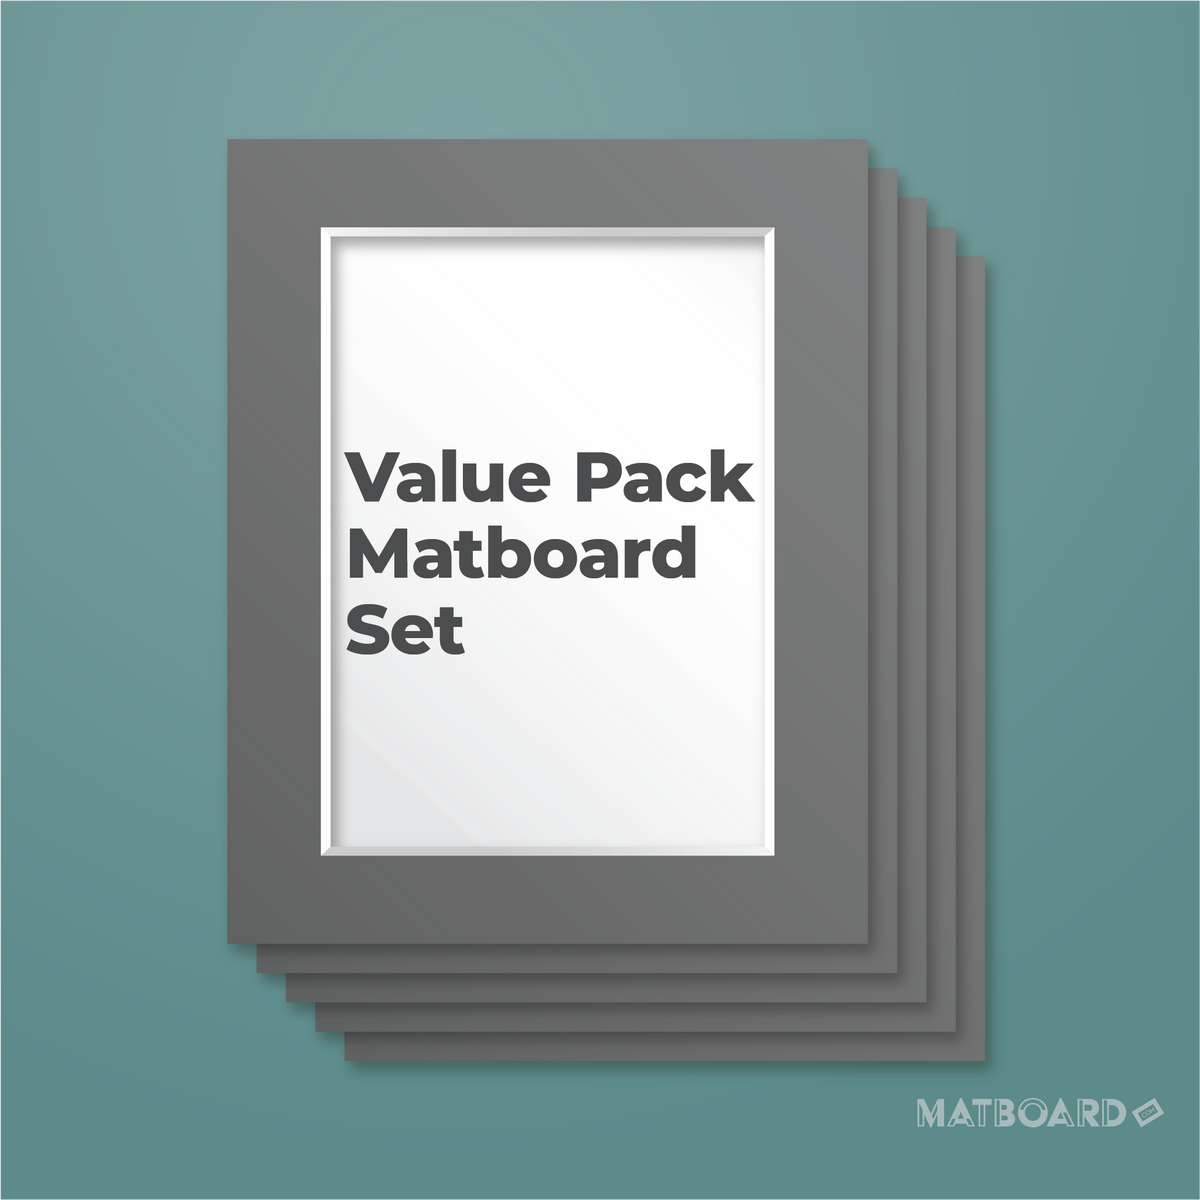 11x14 Custom Cut Mat Value Pack – Matboarddotcom